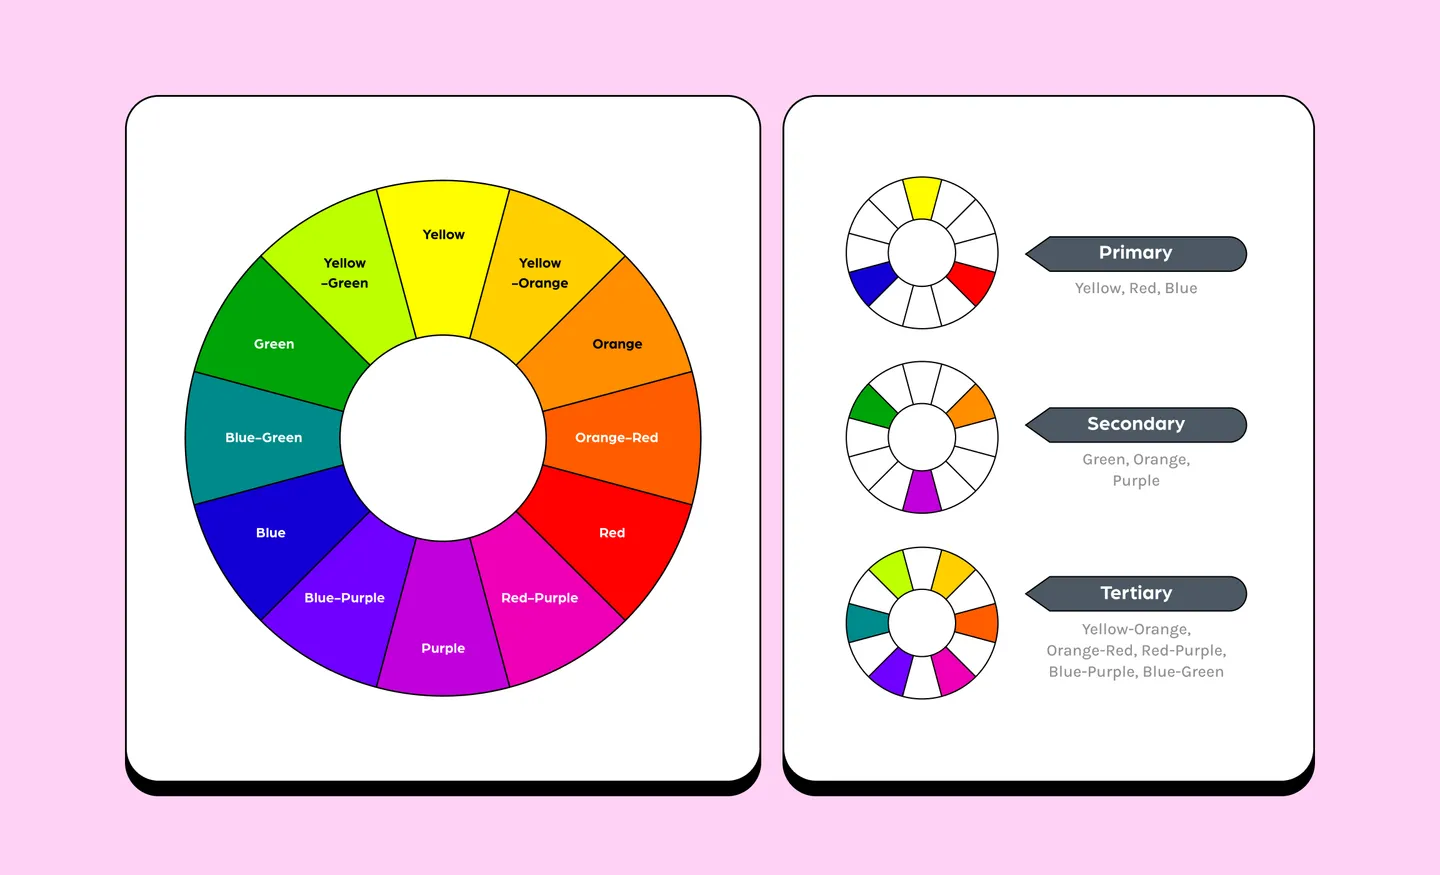 The color wheel